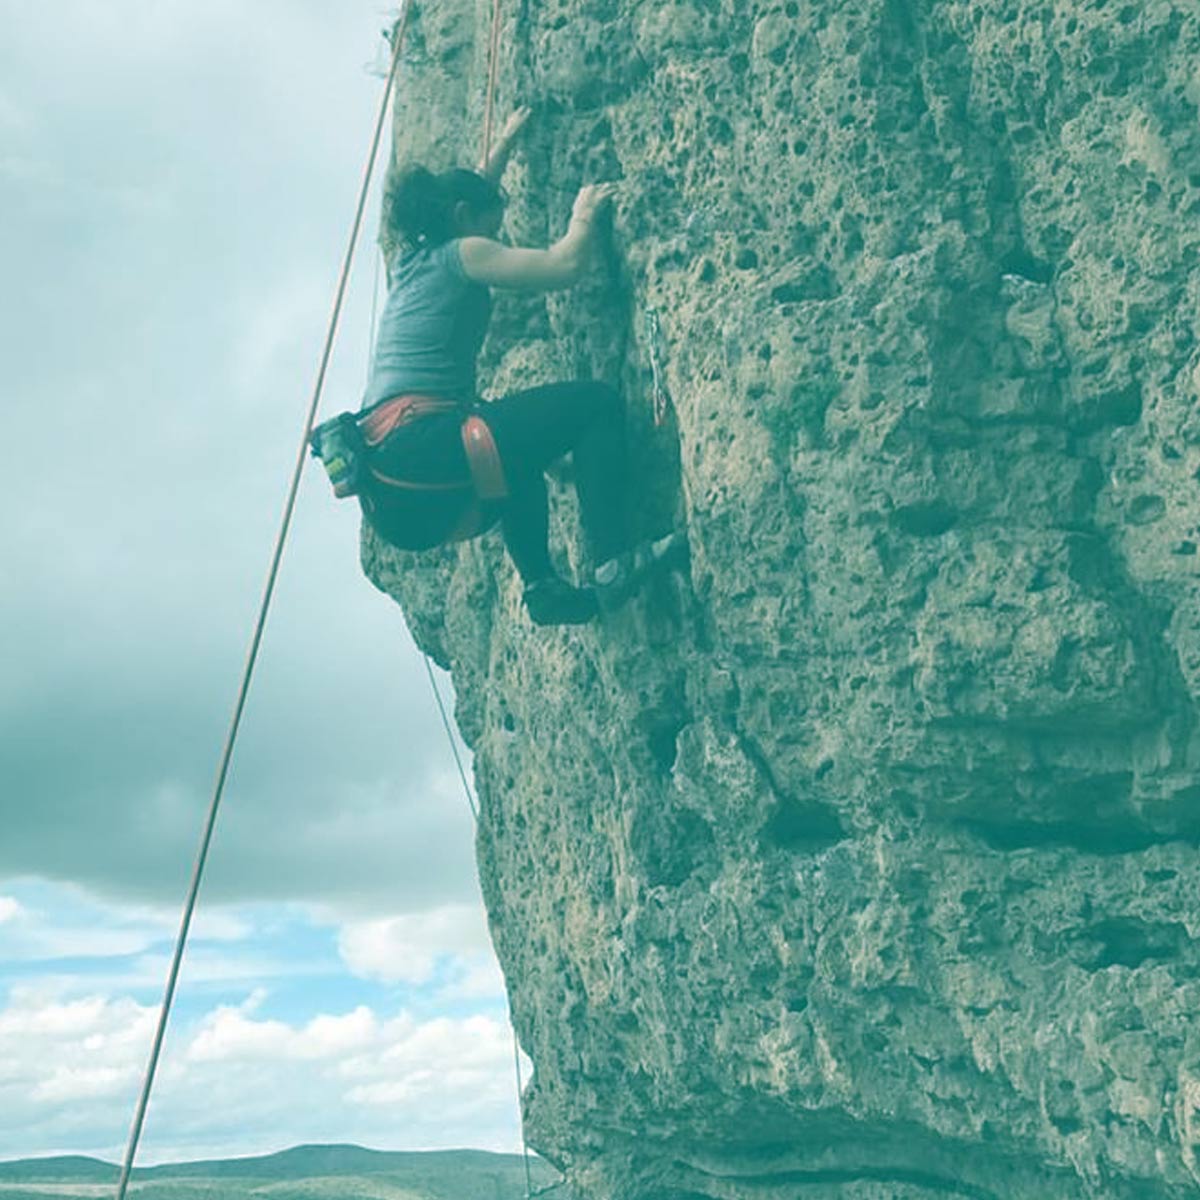 Triana Alonso rockclimbing